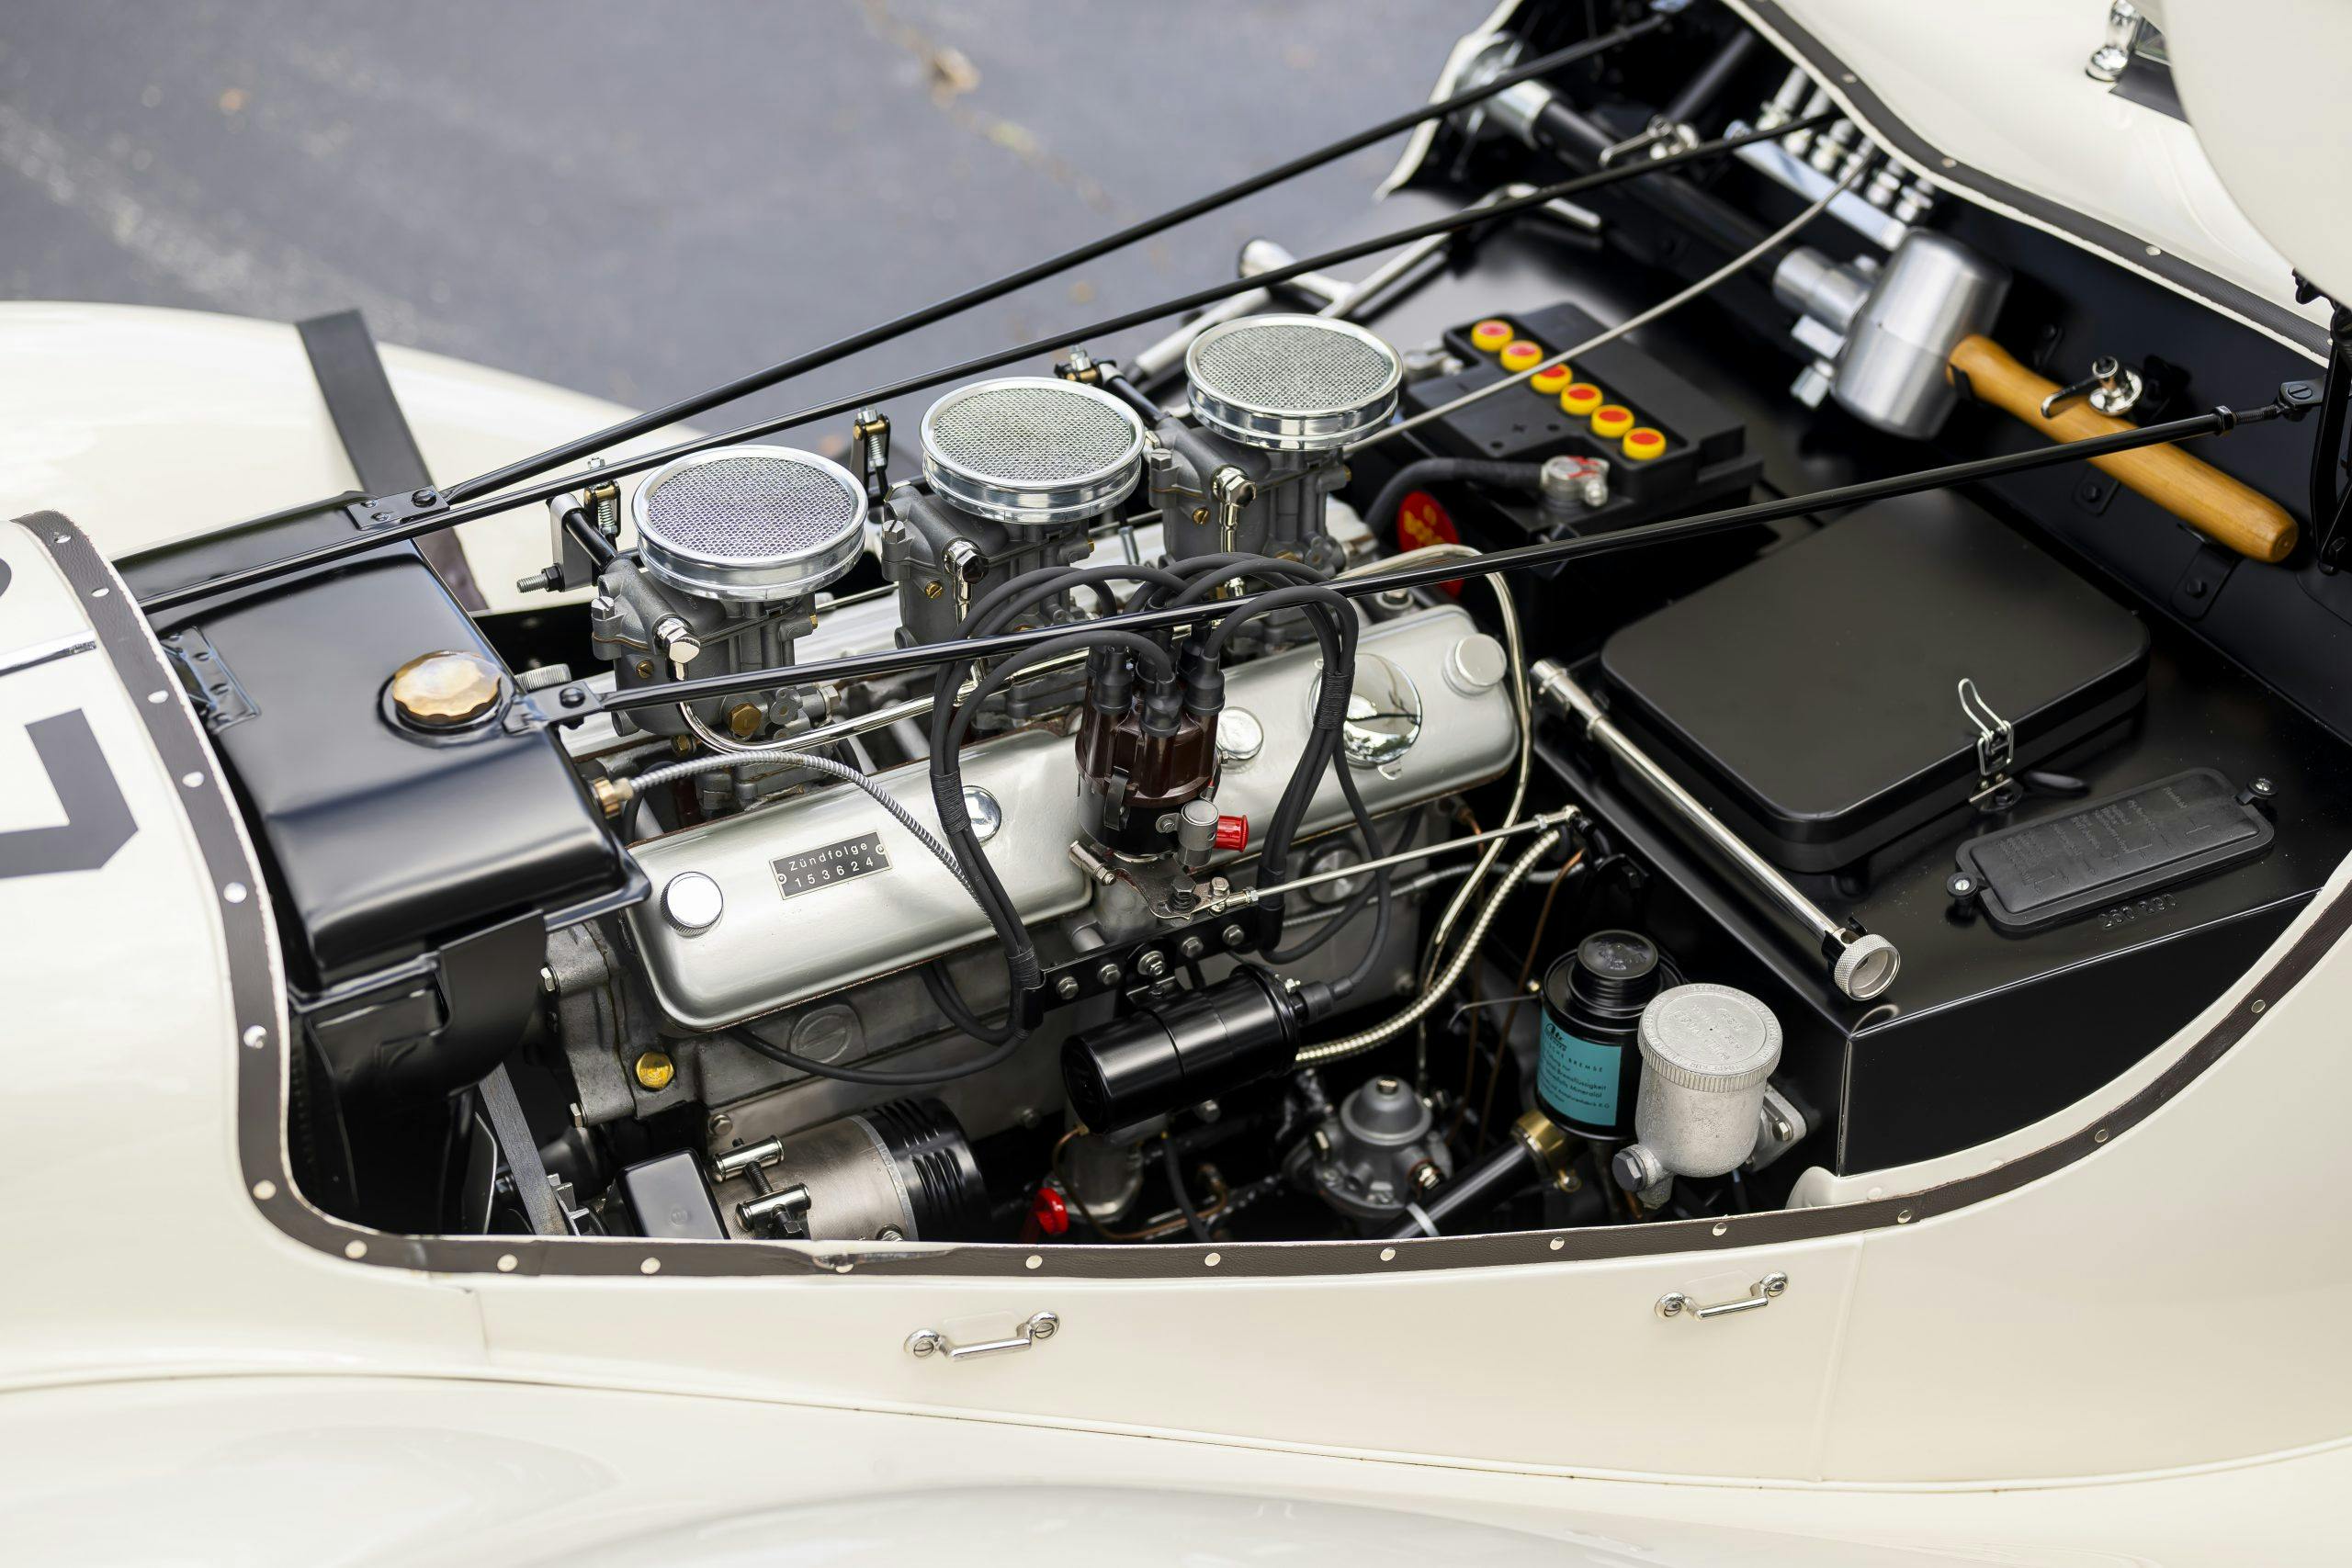 BMW 328 race car engine